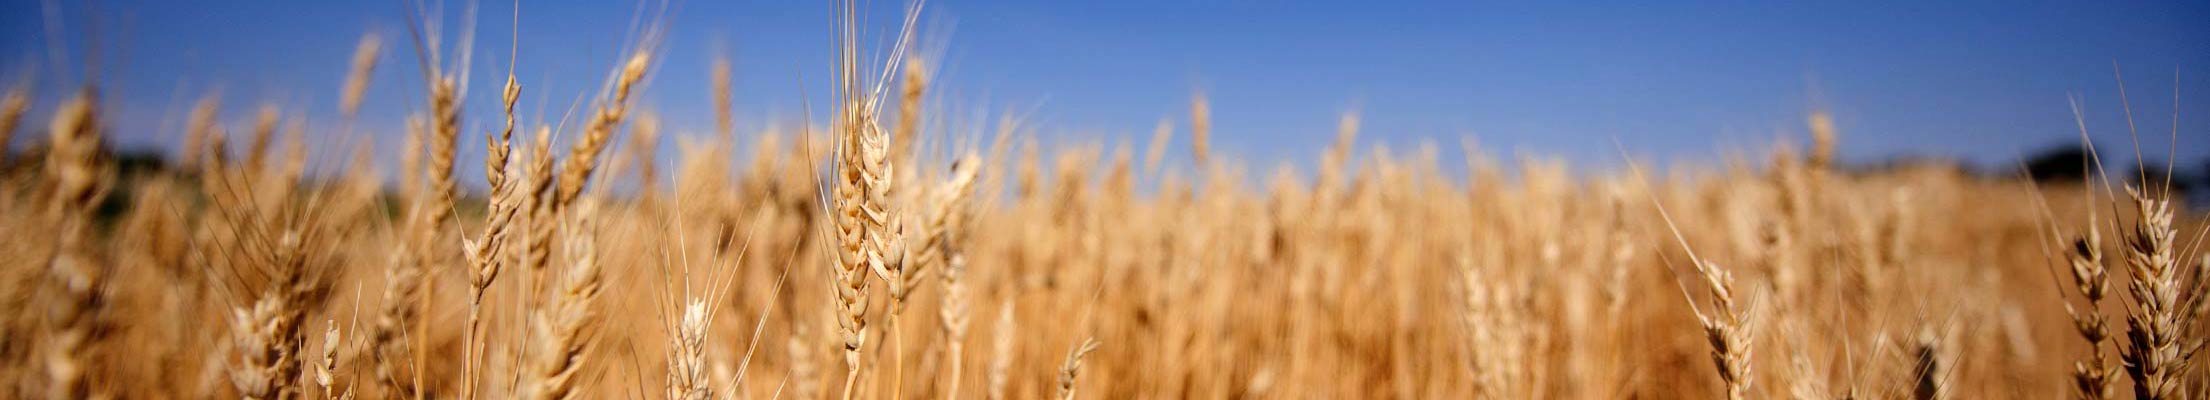 A wheat field against a clear sky.